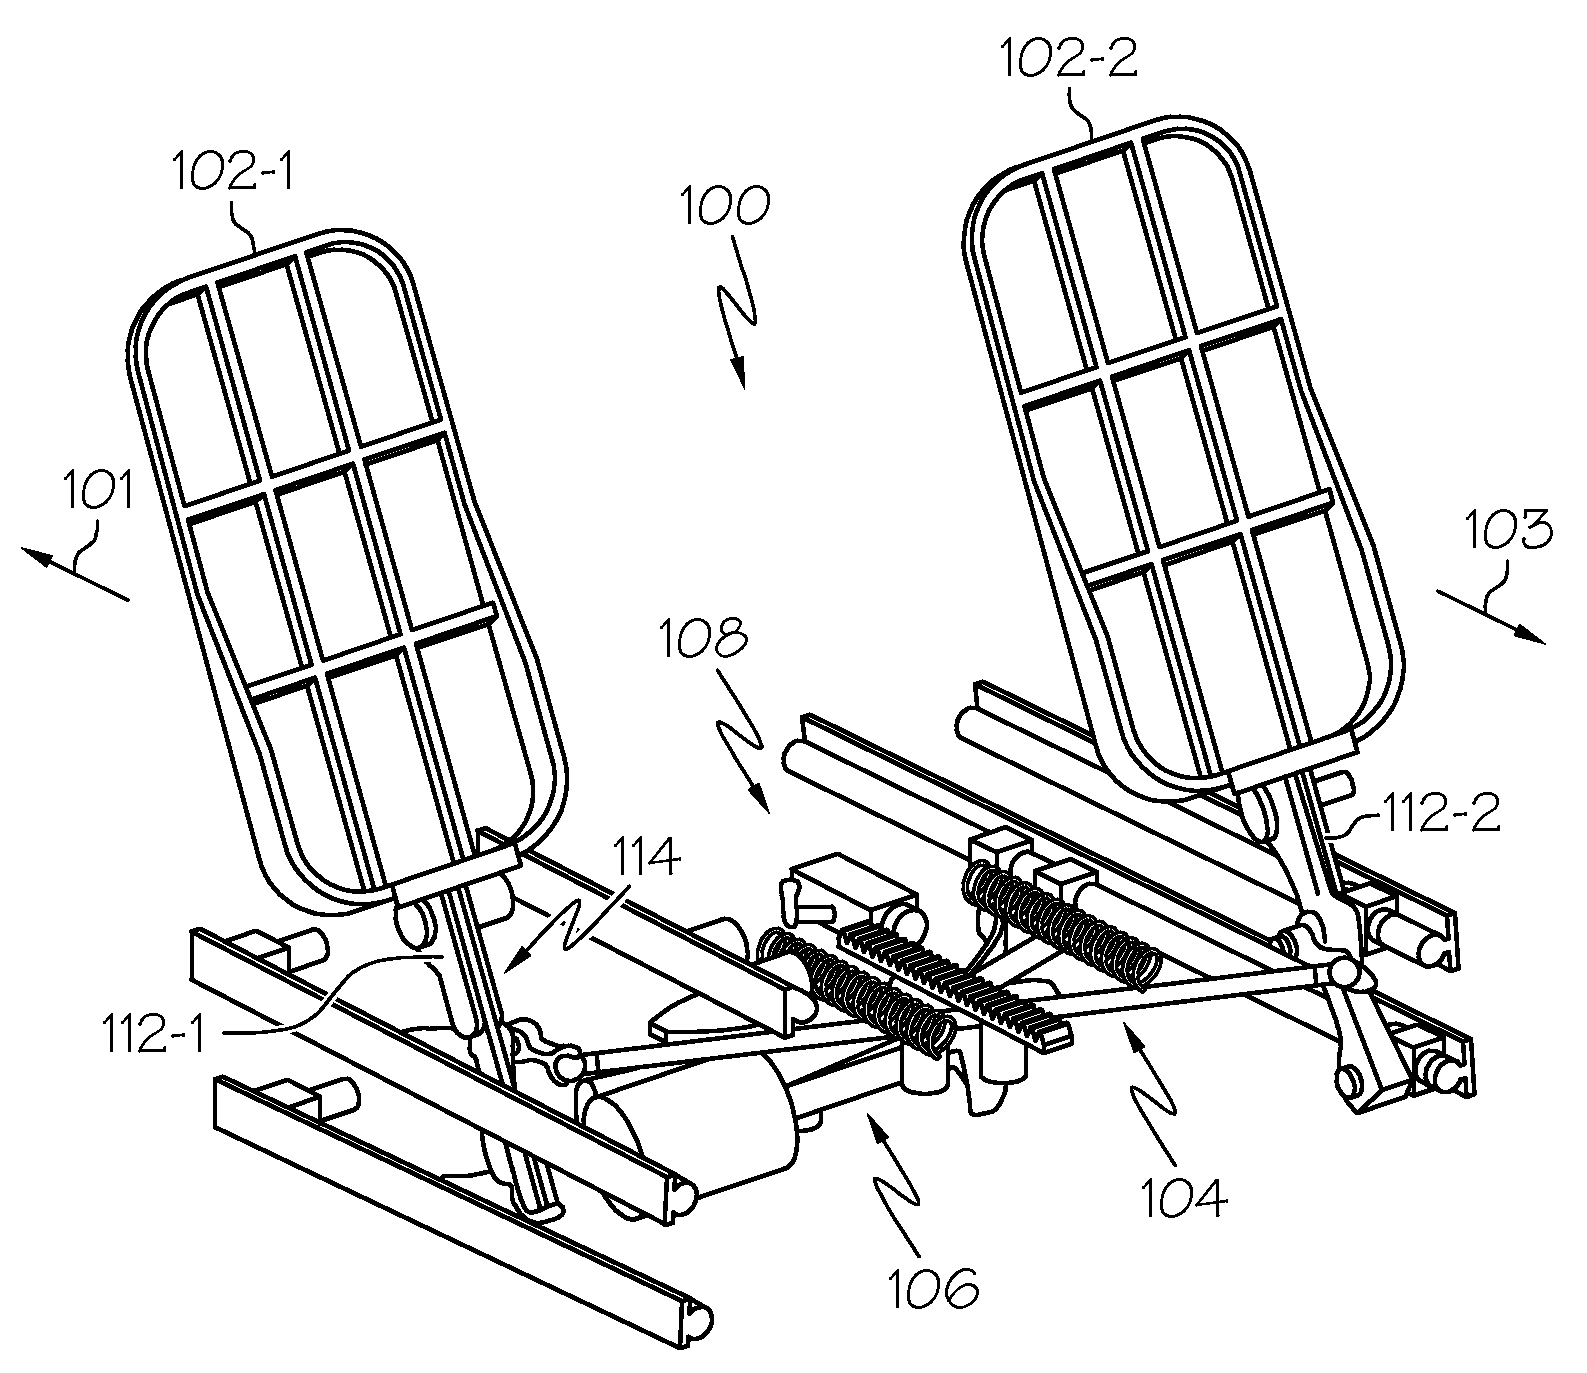 Rudder pedal assembly including non-parallel slide rails